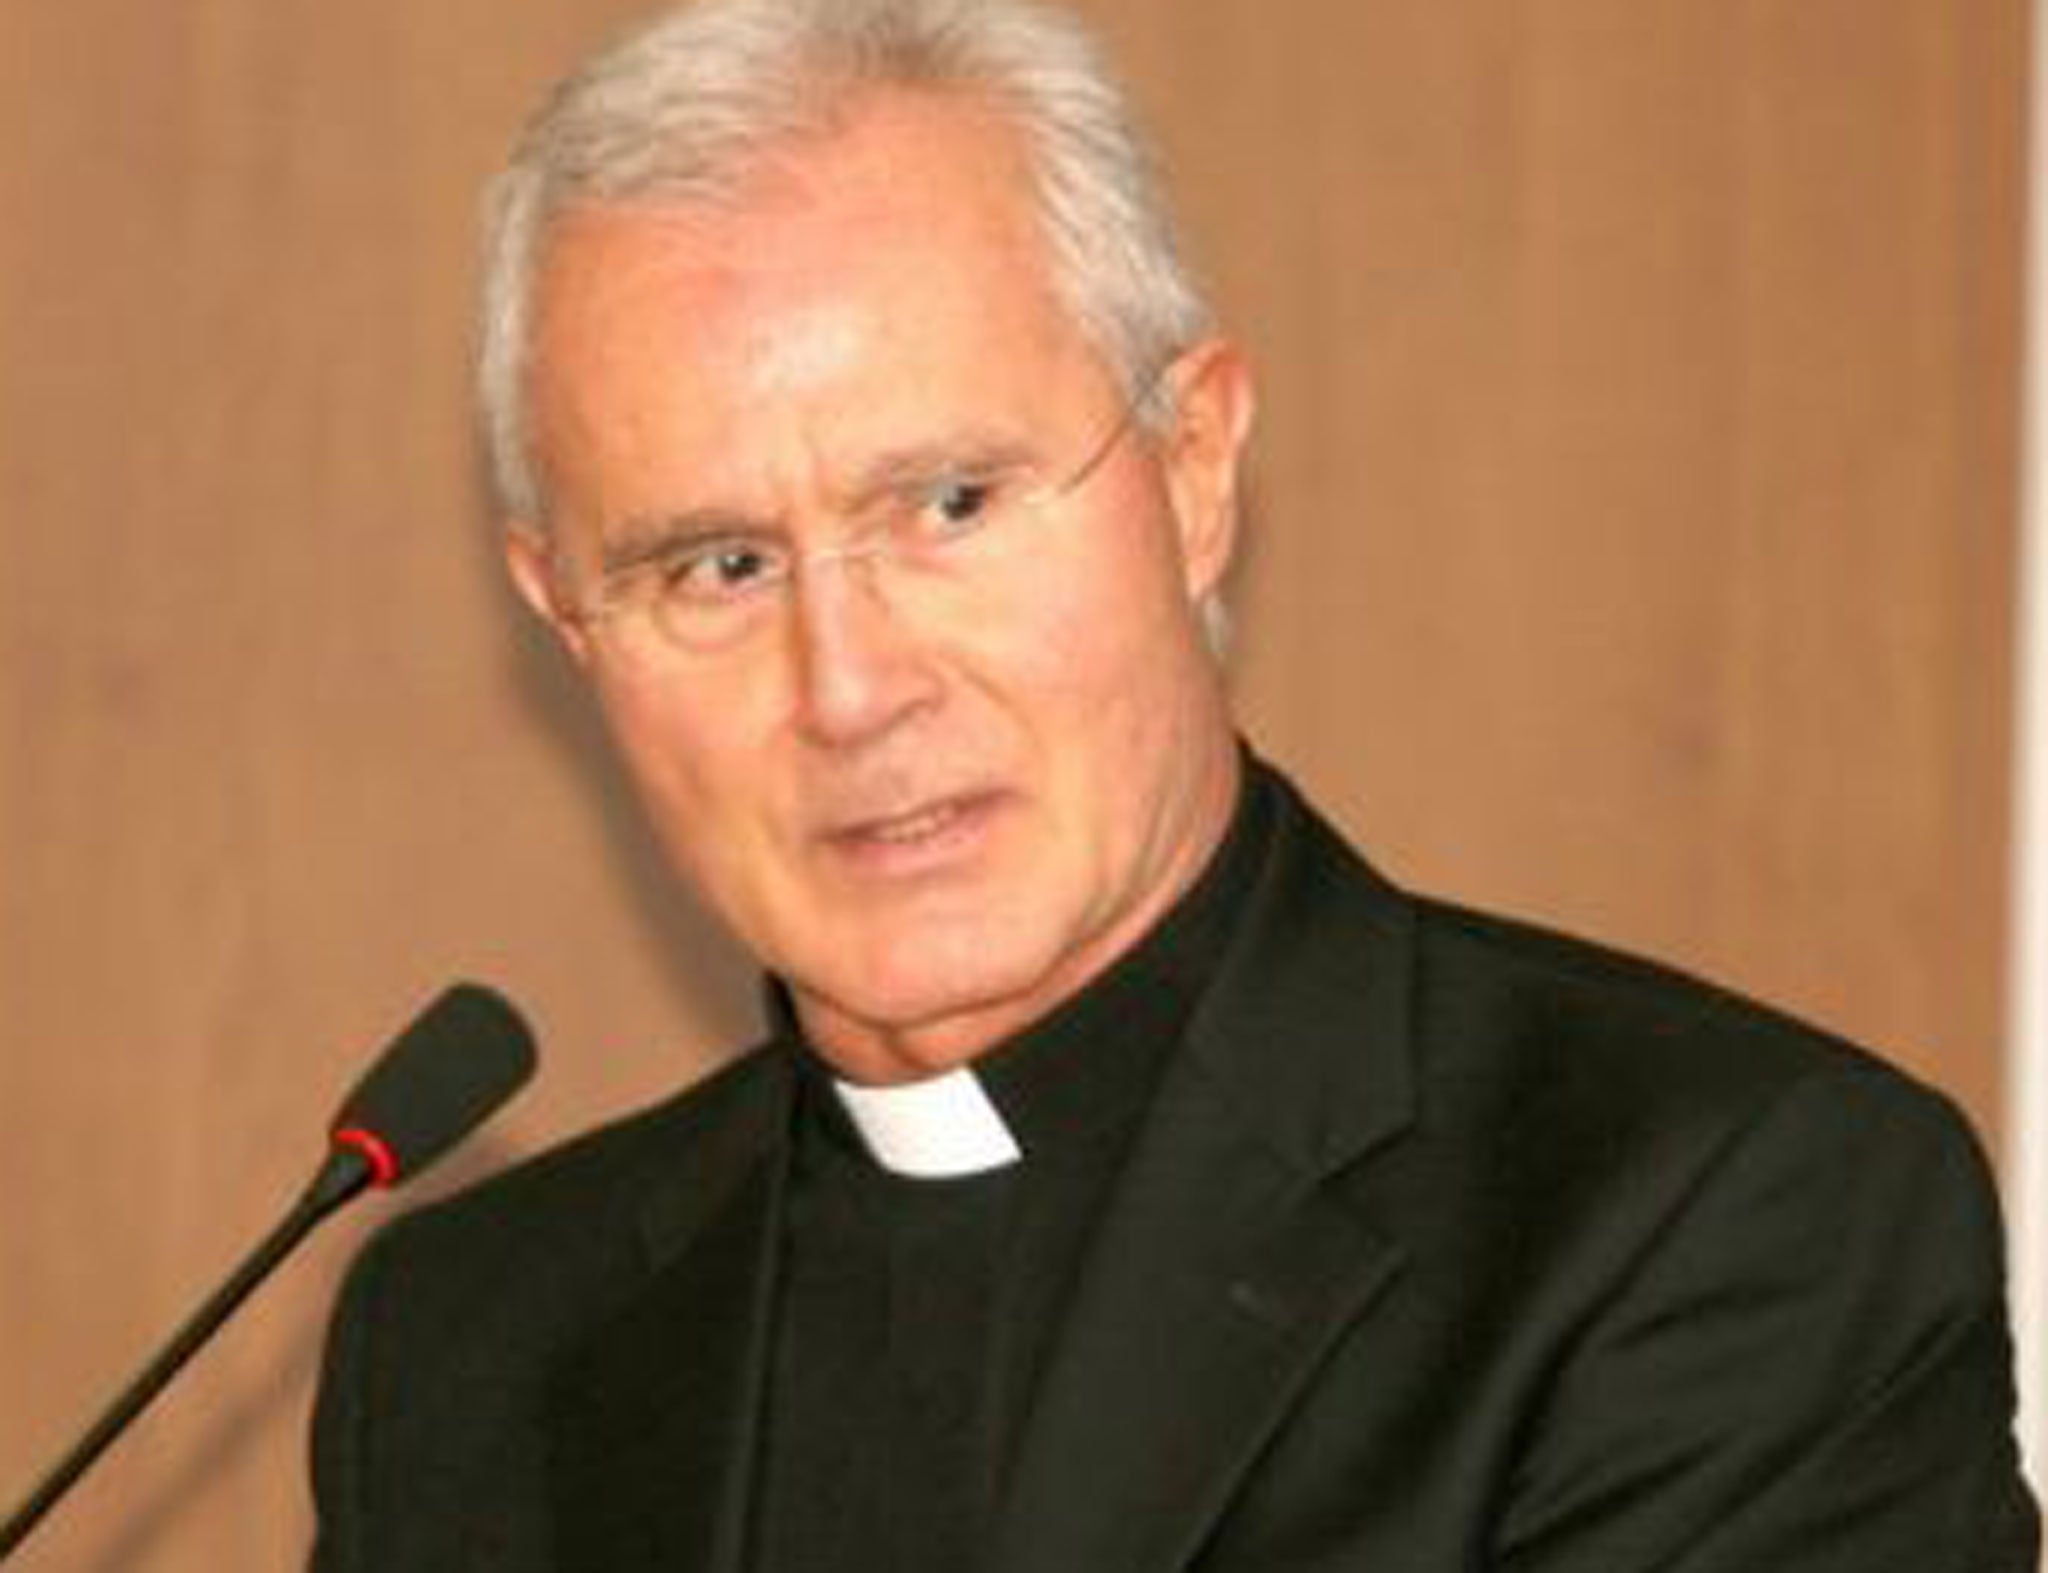 Monsignor Nunzio Scarano is already under investigation in a purported money-laundering plot